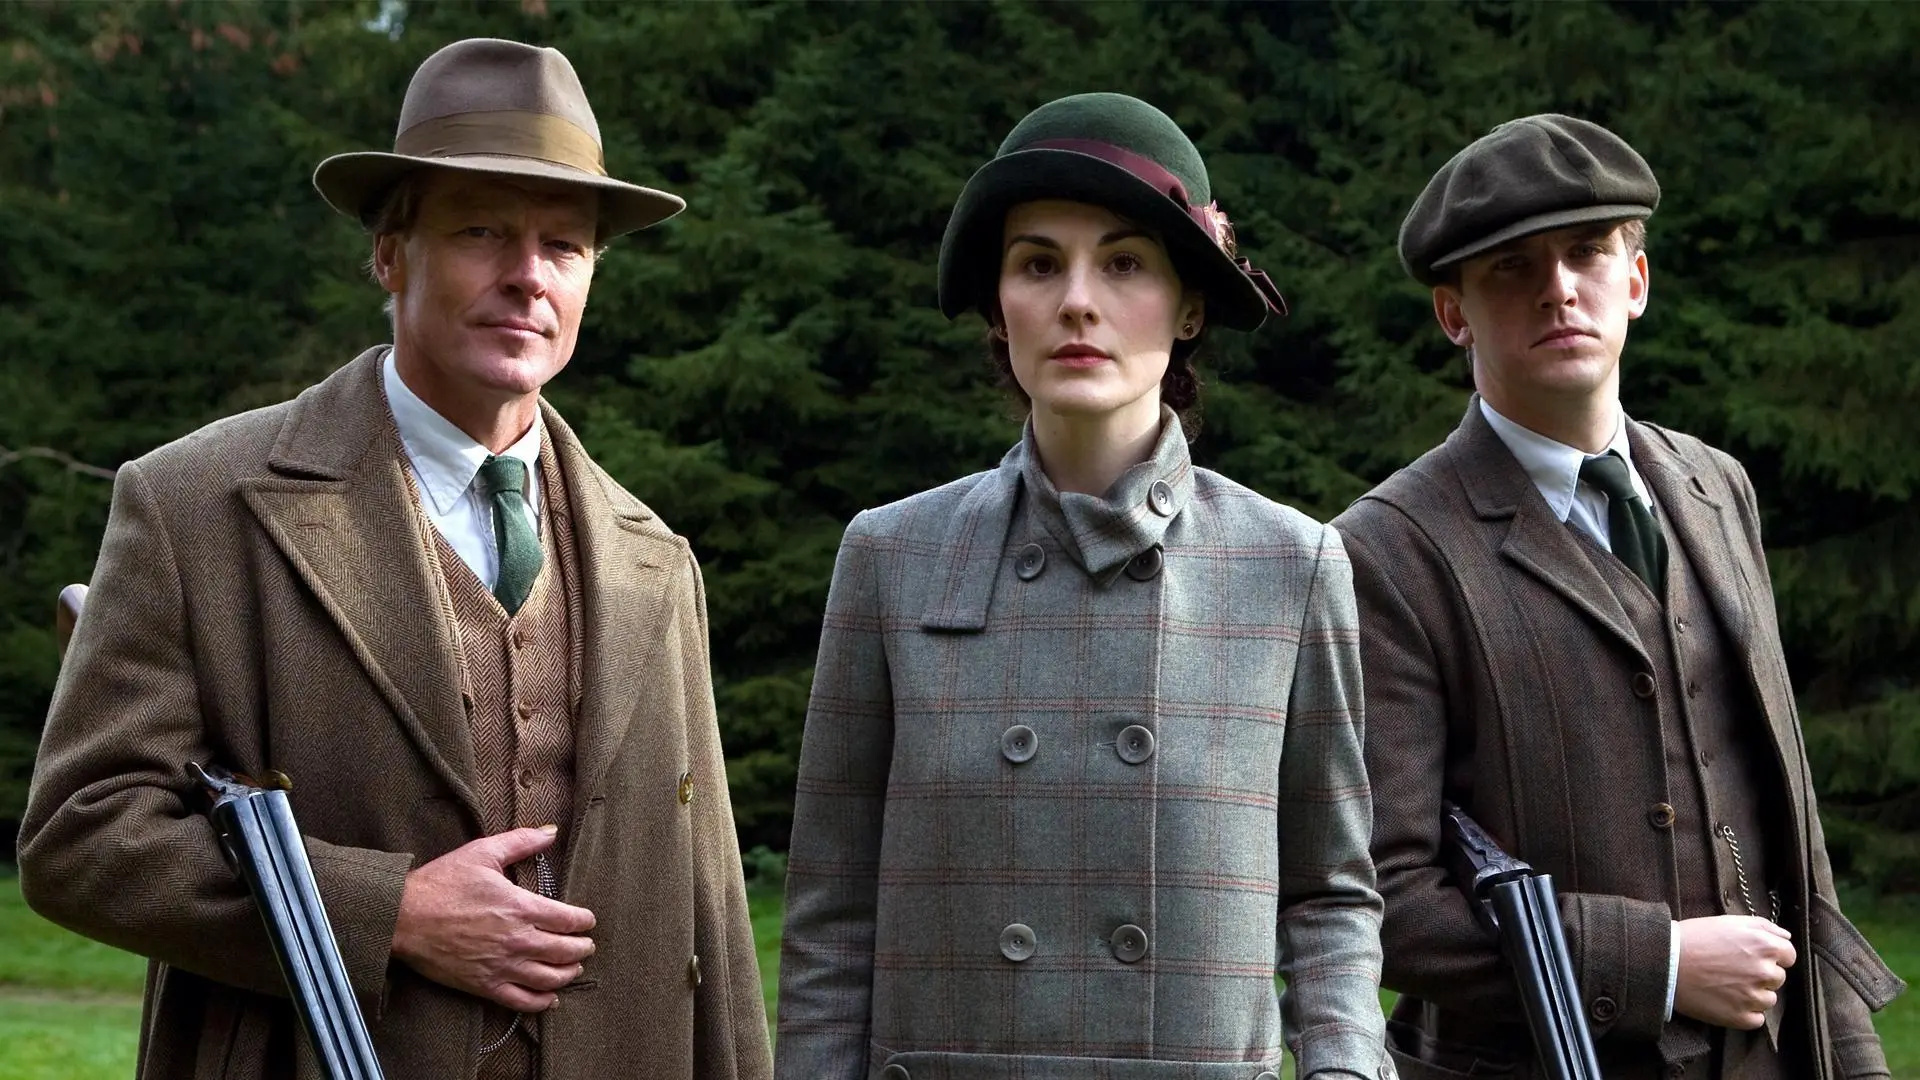 Michelle Dockery: Iain Glen as Sir Richard Carlisle, Downton Abbey TV series, Created by Julian Fellowes. 1920x1080 Full HD Background.